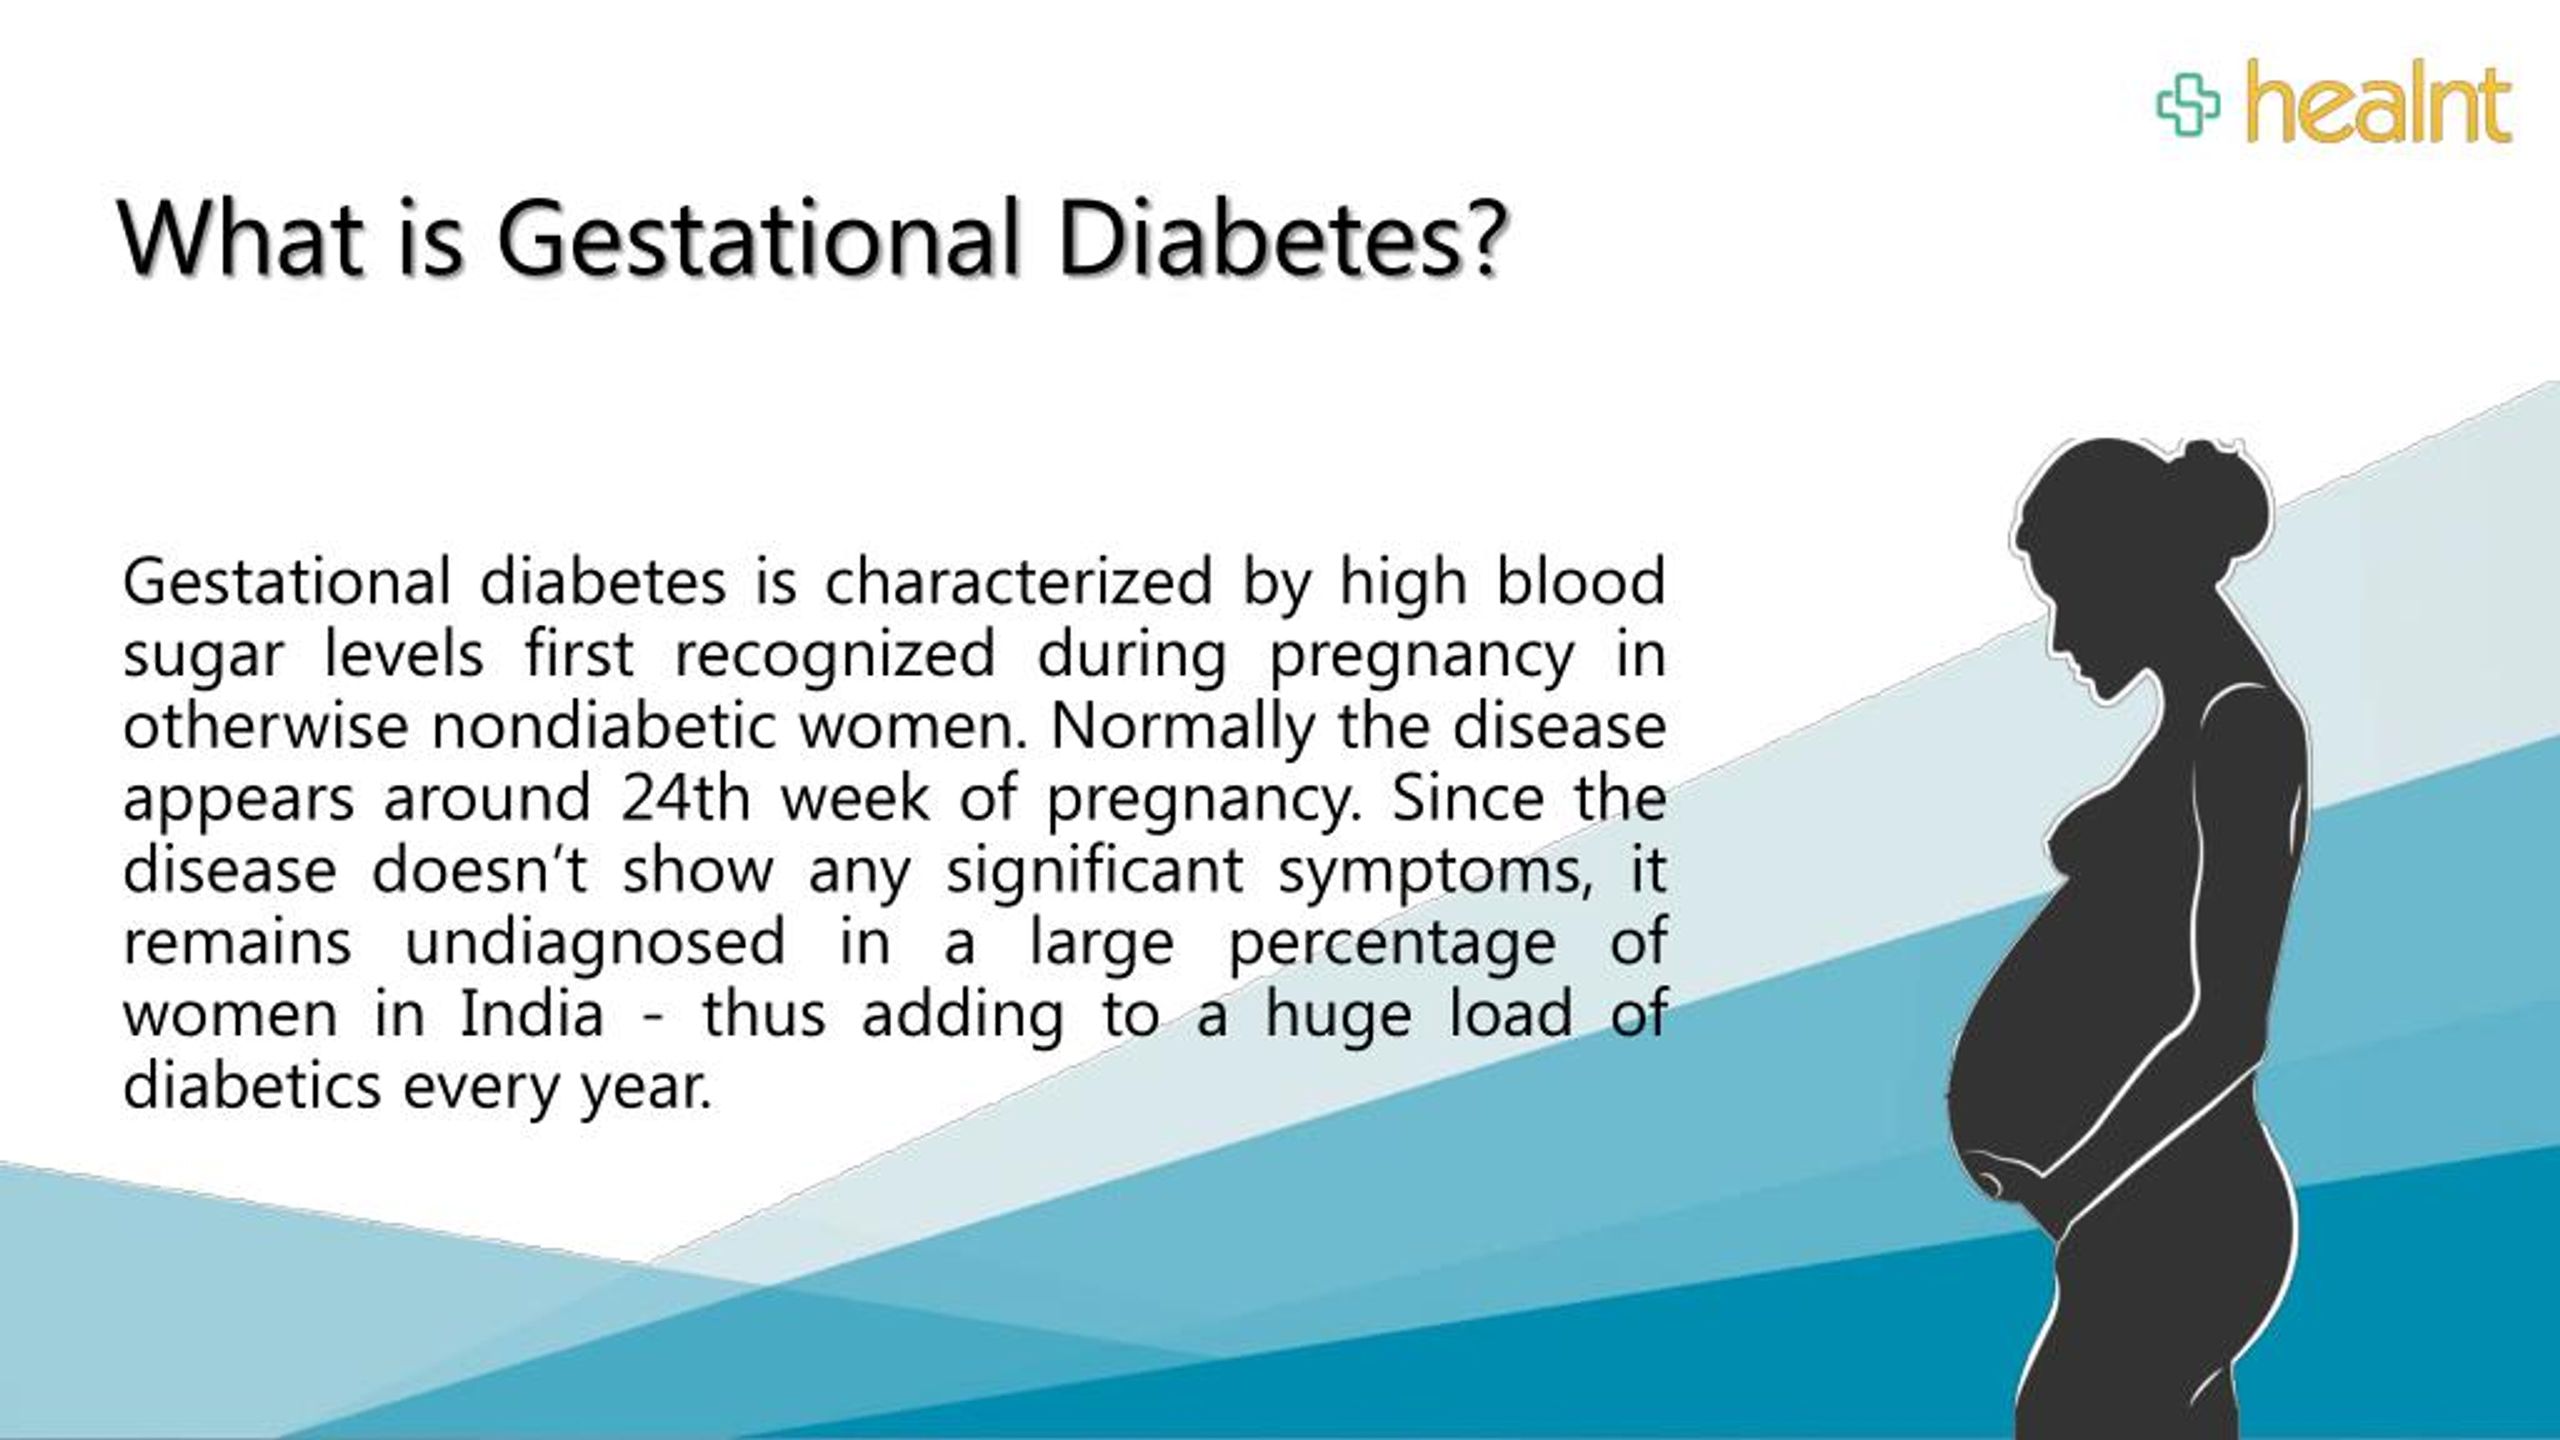 gestational diabetes mellitus case presentation ppt